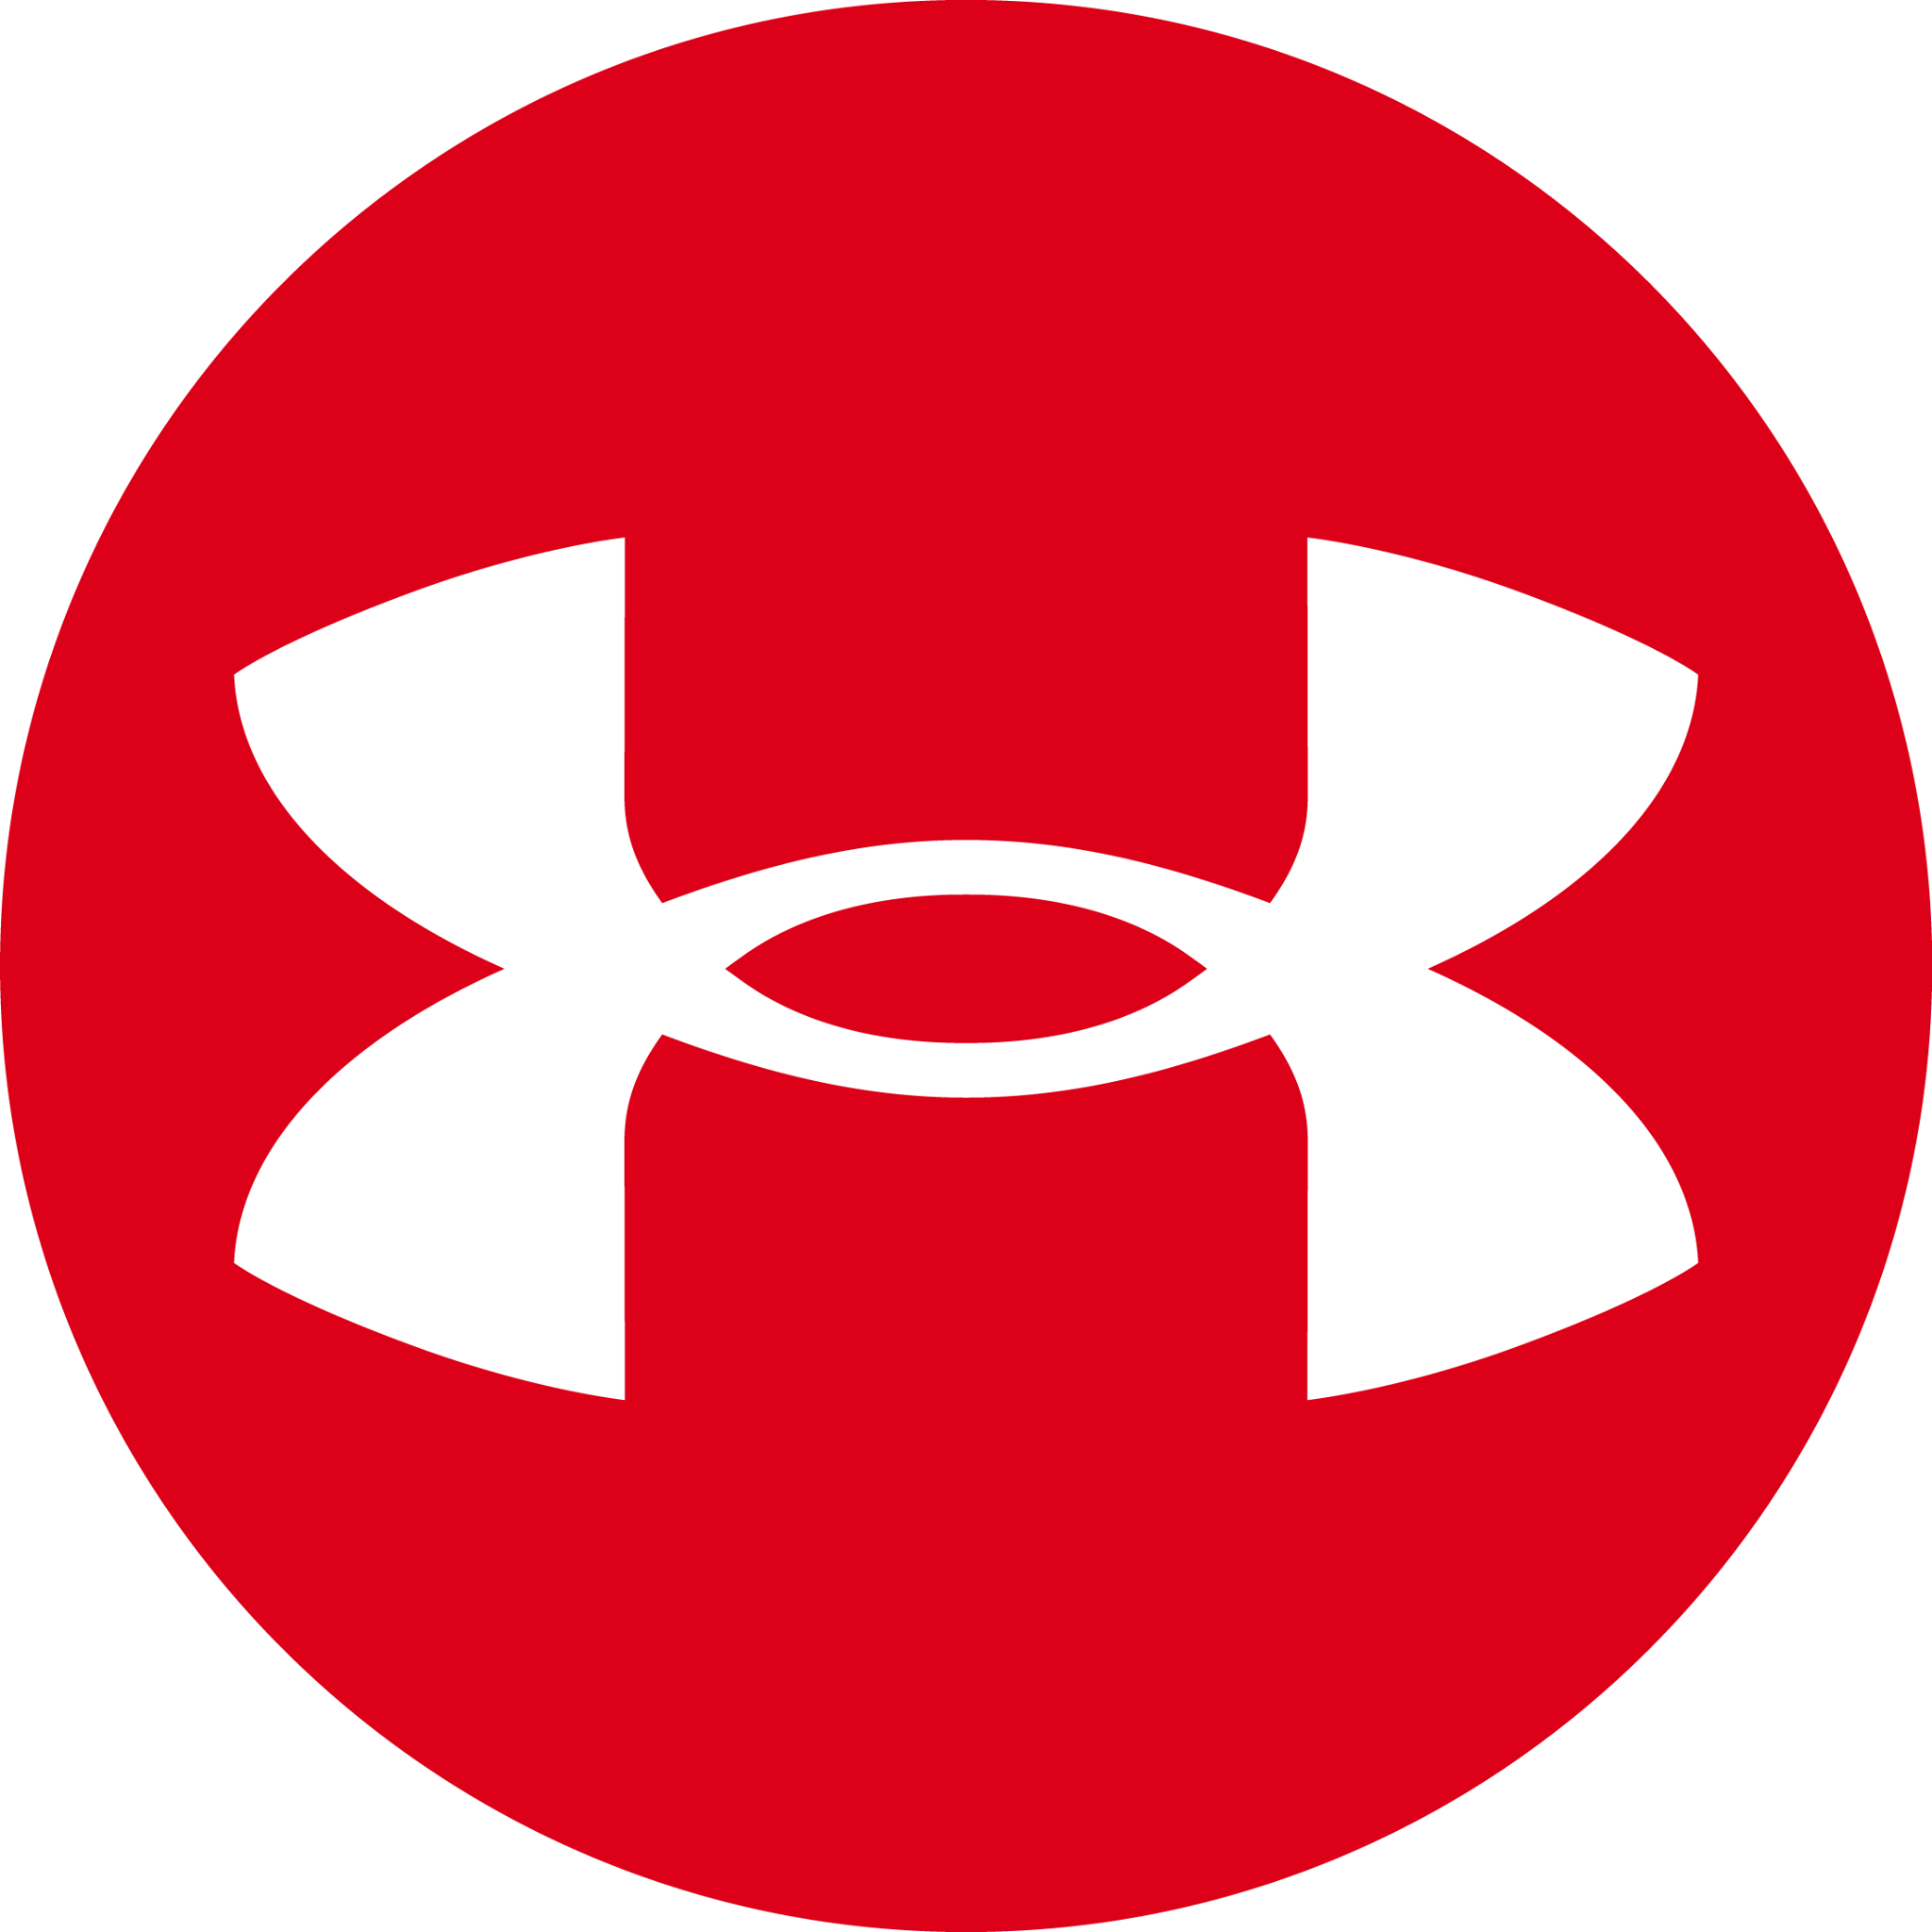 Company logo of Under Armour